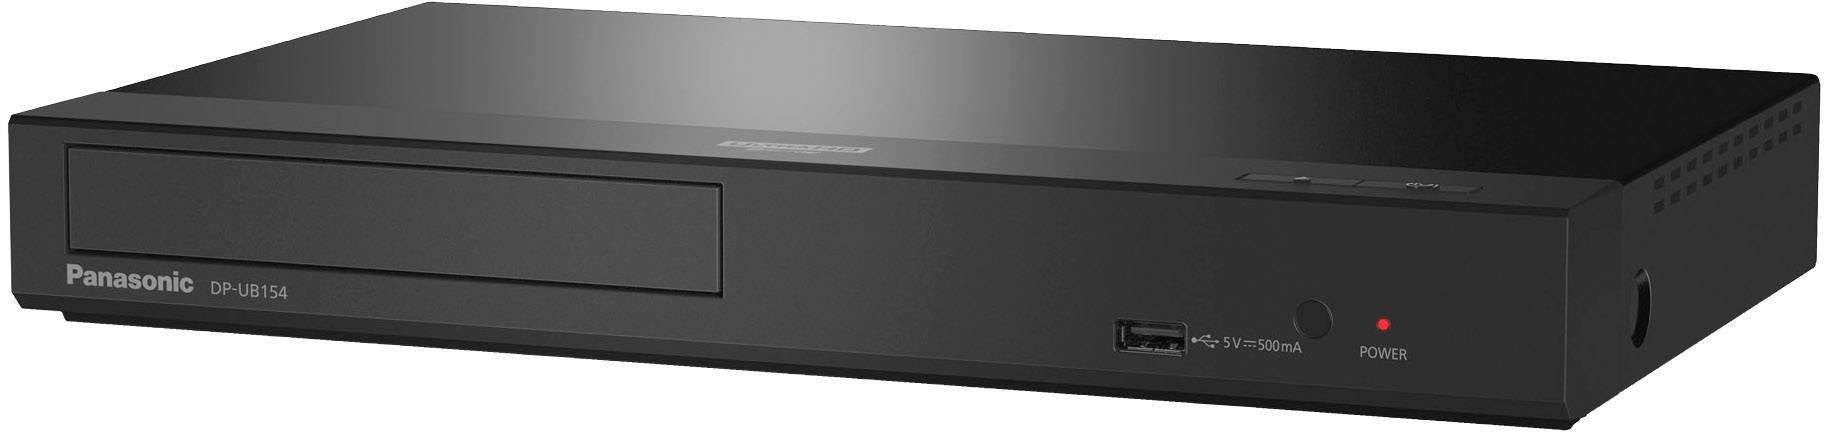 Panasonic DP-UB154 Lecteur Blu-ray UHD 4K Ultra HD noir - Conrad Electronic  France